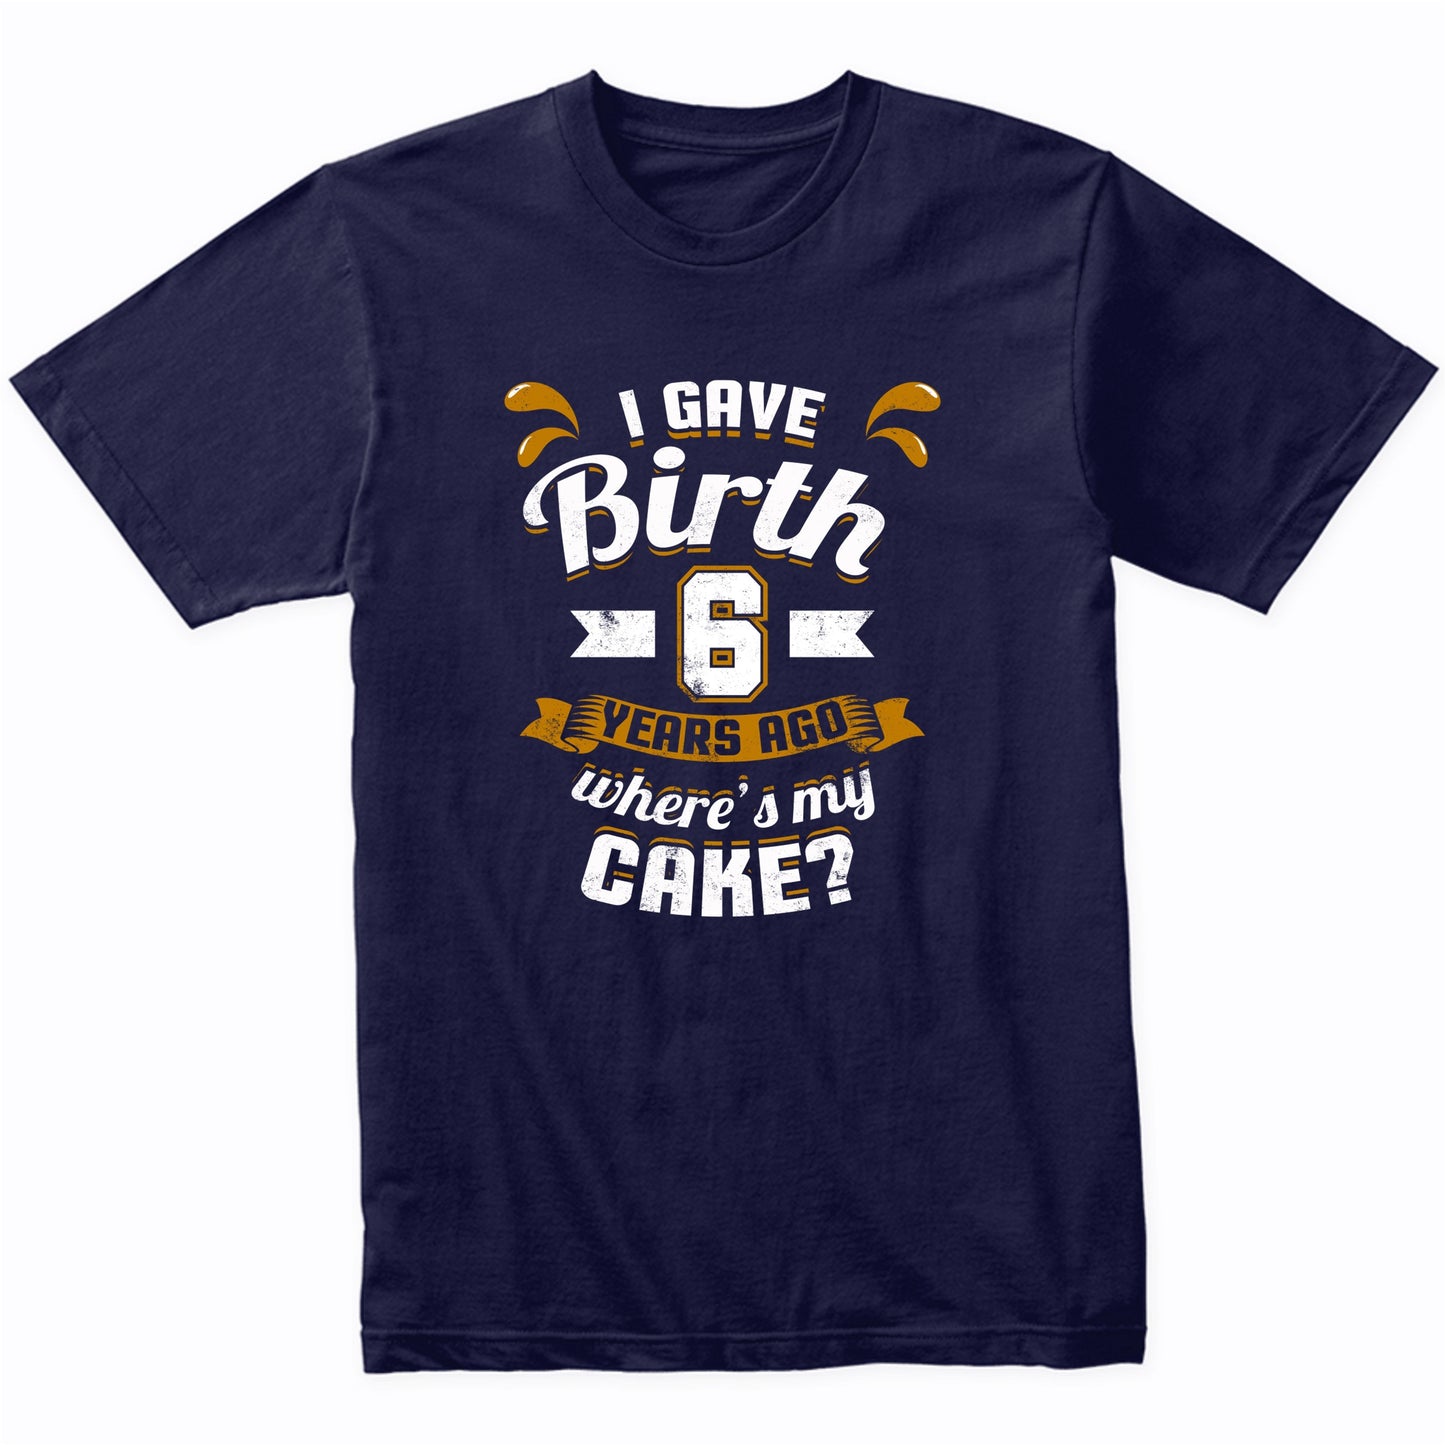 6th Birthday Shirt For Mom I Gave Birth 6 Years Ago Where's My Cake?